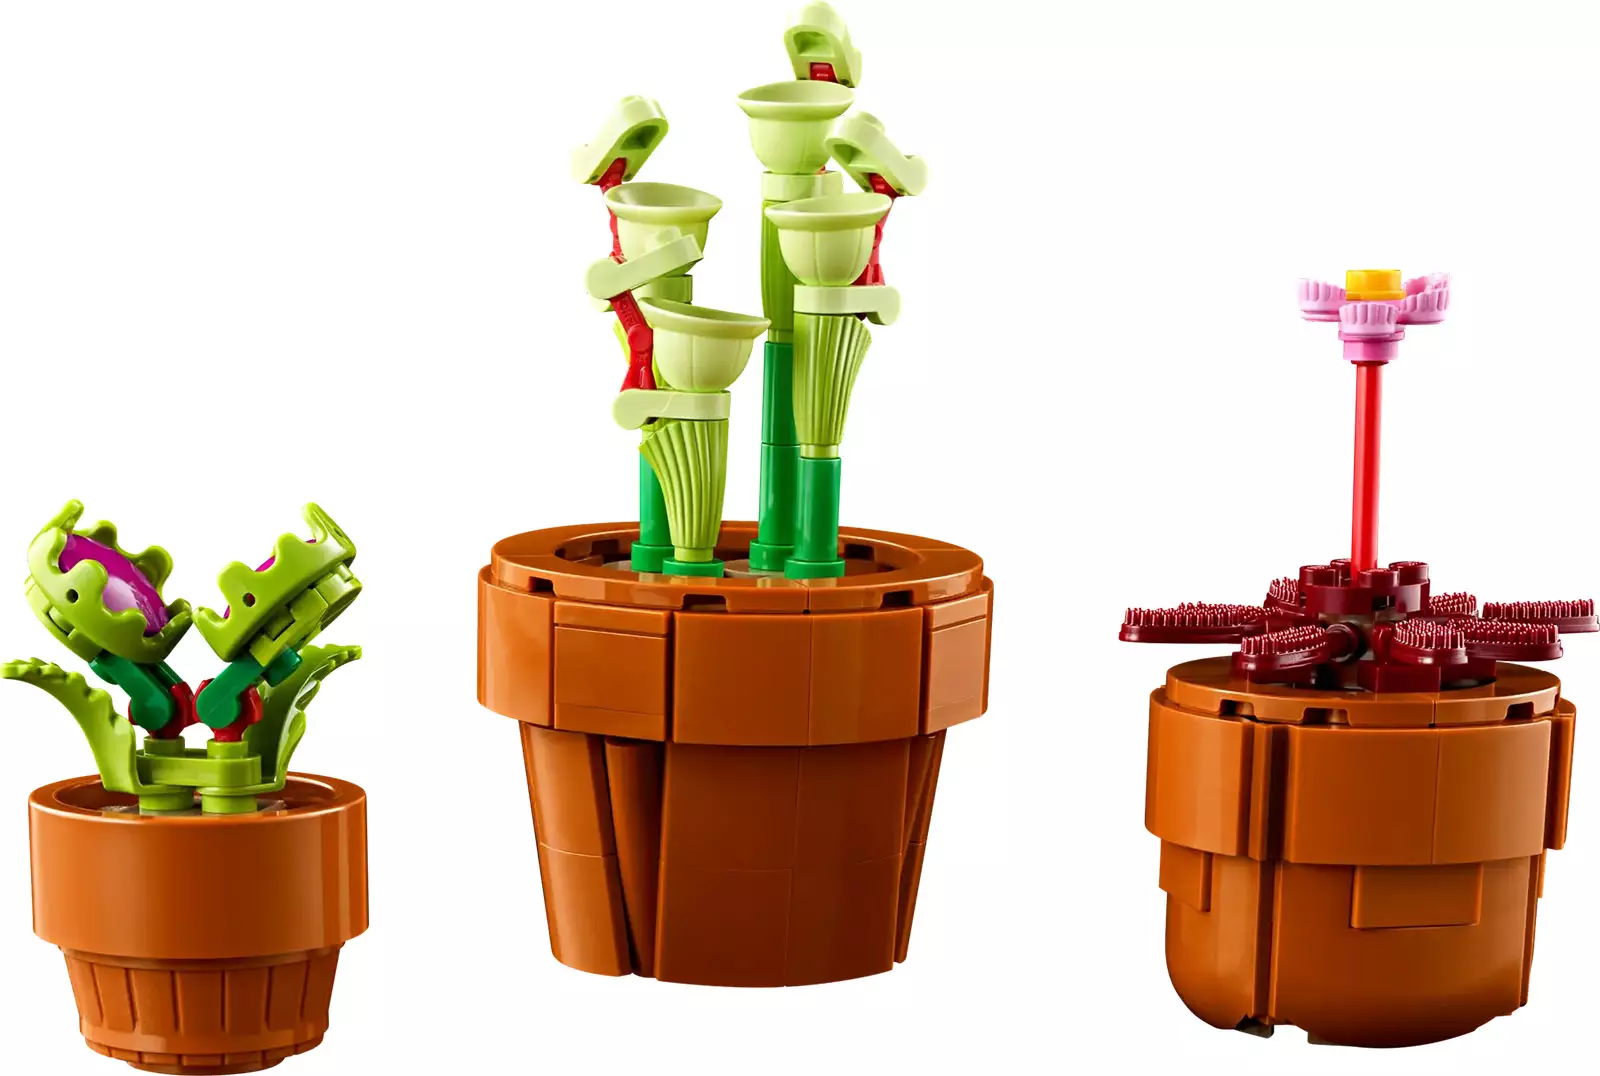 LEGO Tiny Plants 10329, A Verdant Oasis in Miniature